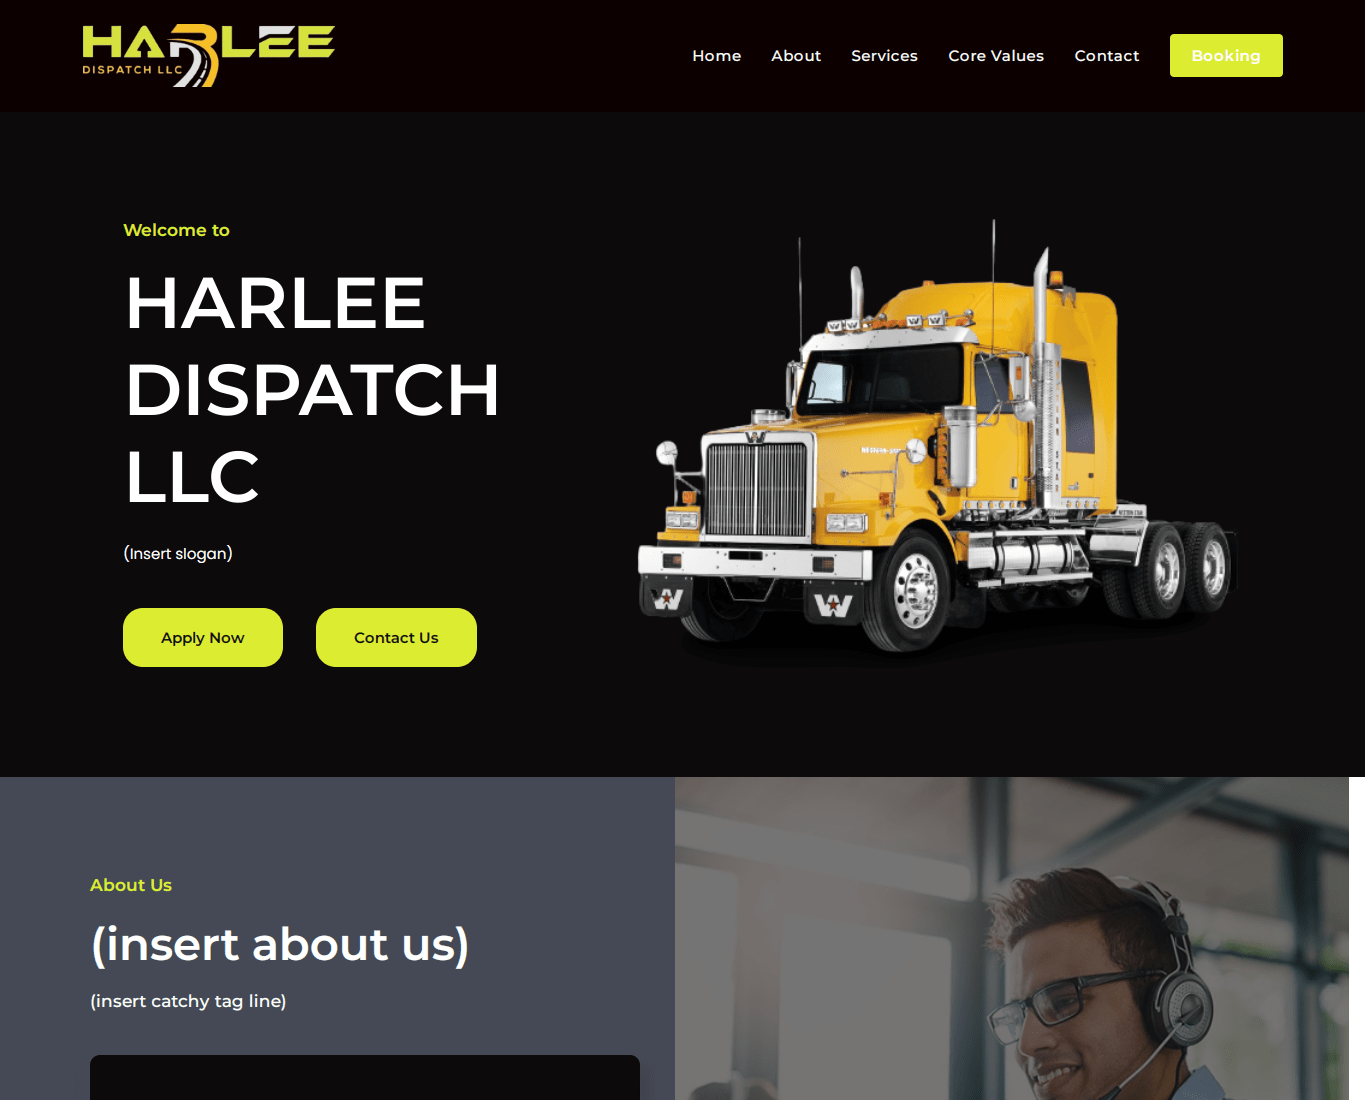 HARLEE DISPATCH LLC